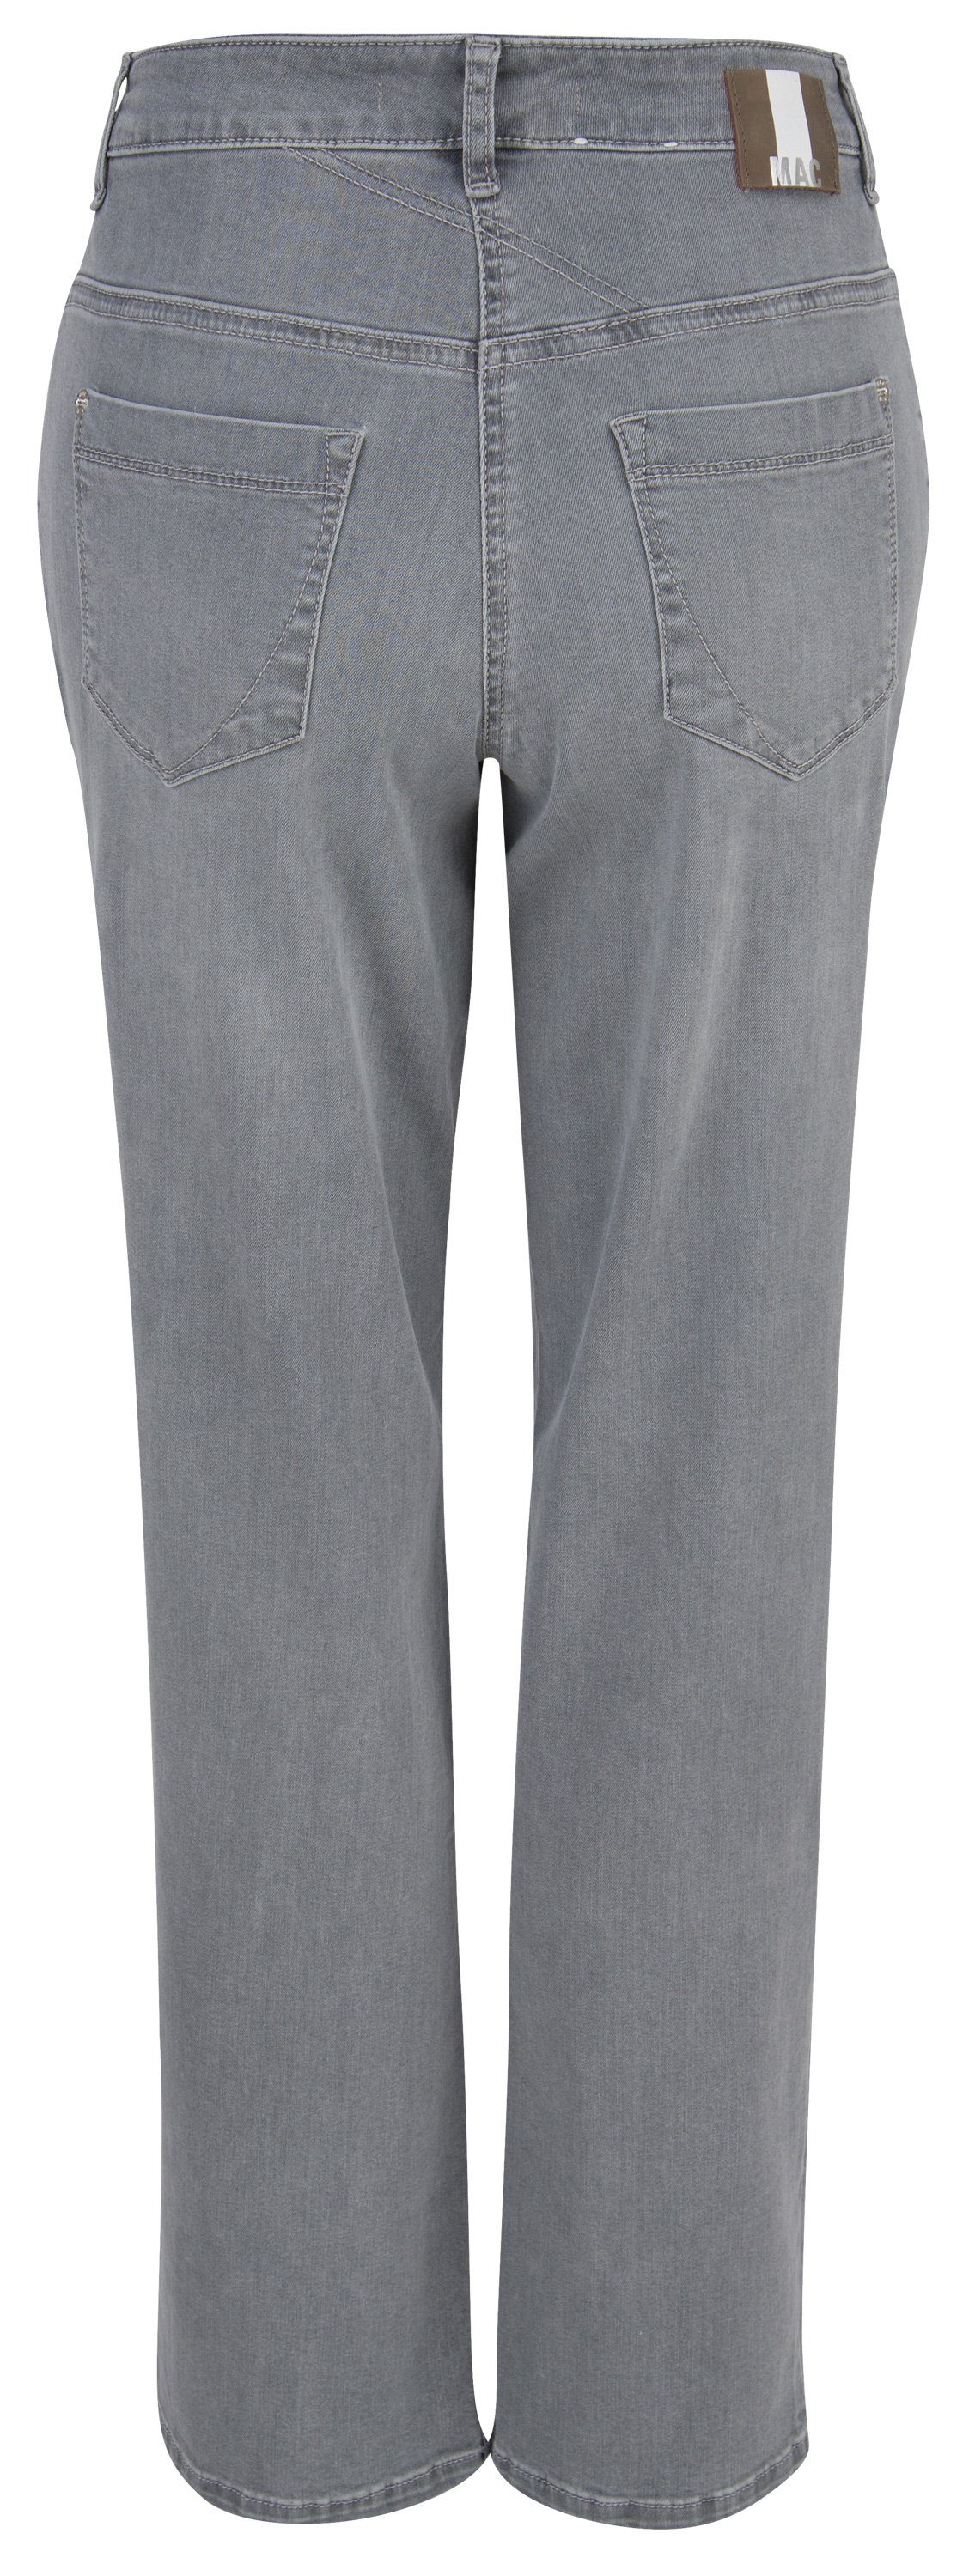 5381-90-0380 GRACIA Stretch-Jeans used MAC MAC grey D388 carbon